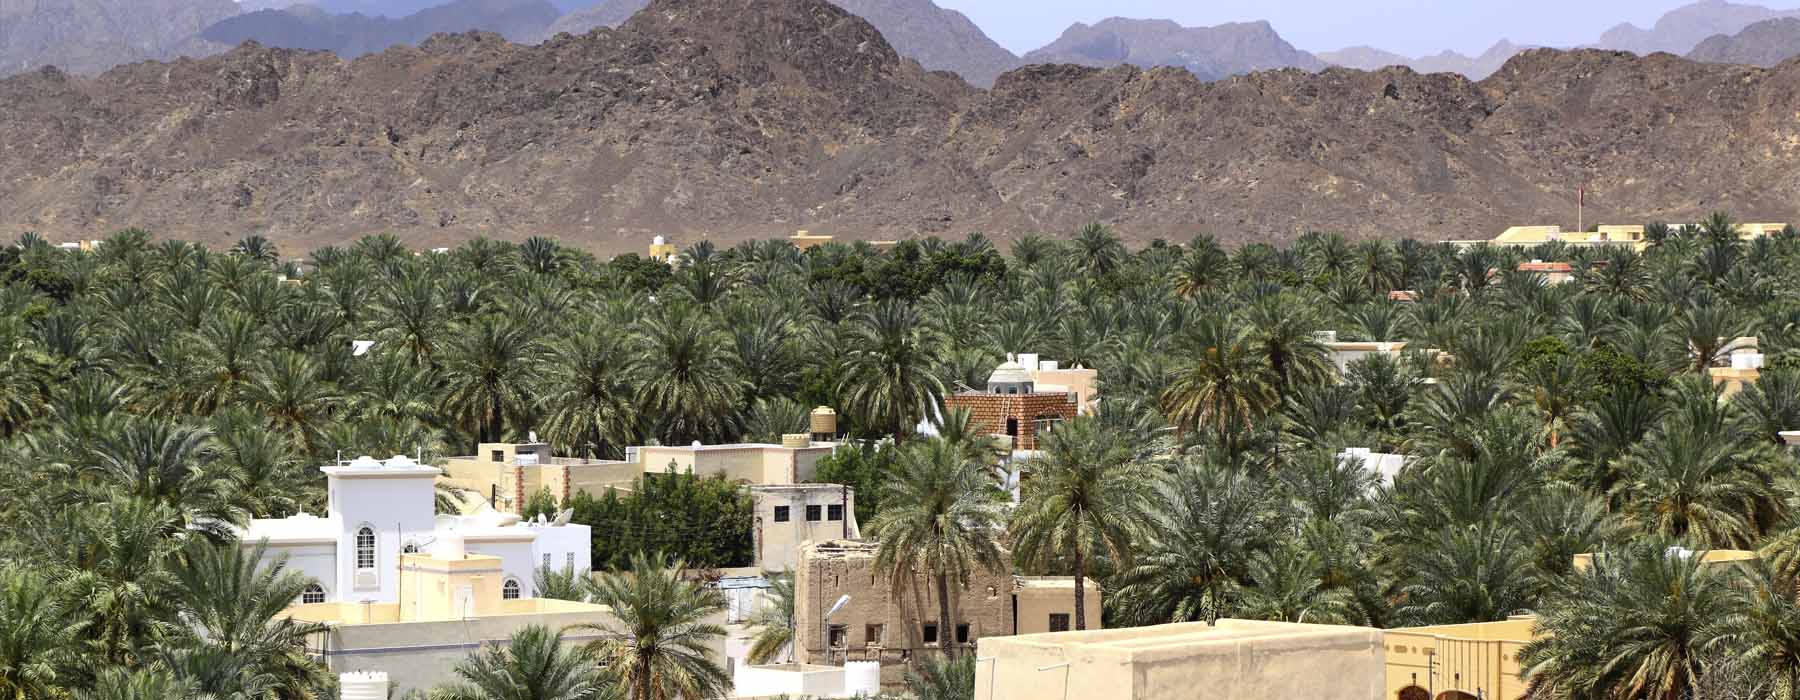 Oman<br class="hidden-md hidden-lg" /> Luxury Holidays